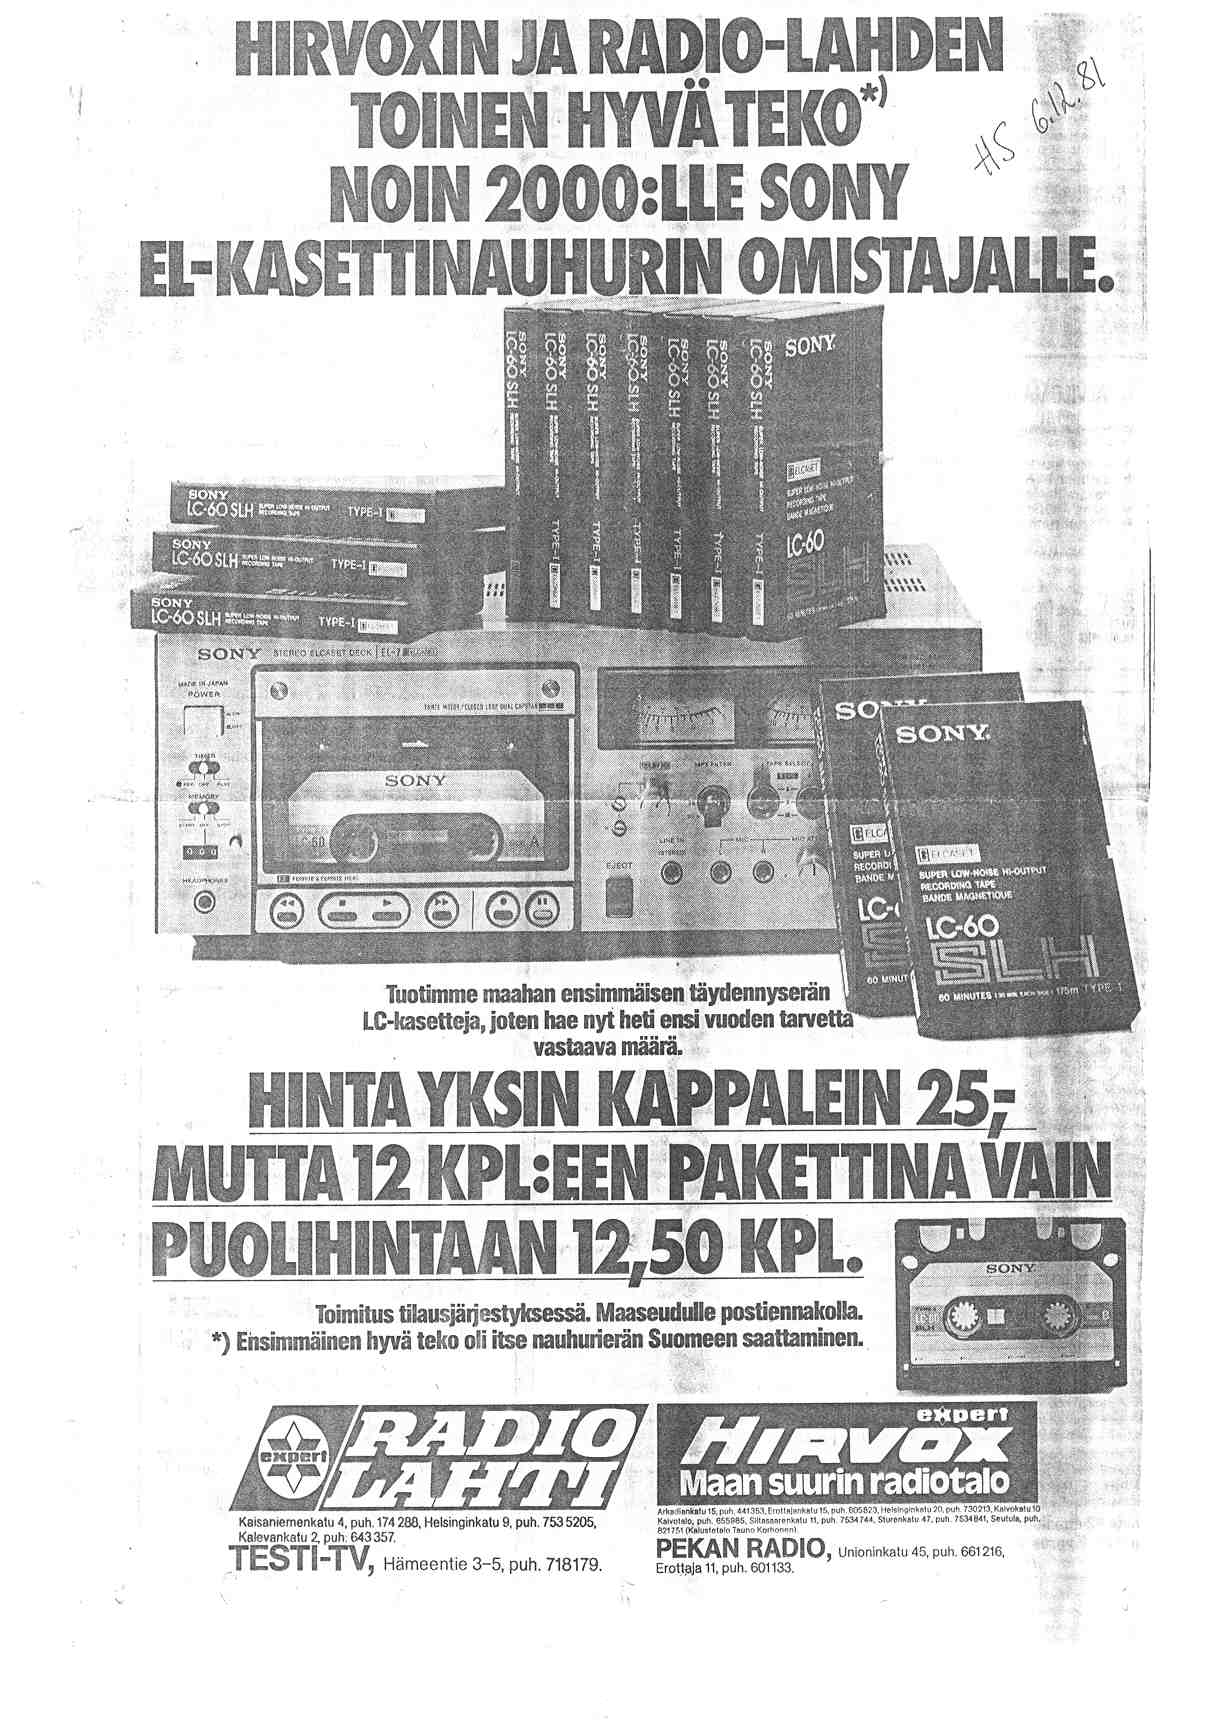 elcaset-finnish-ad-1981